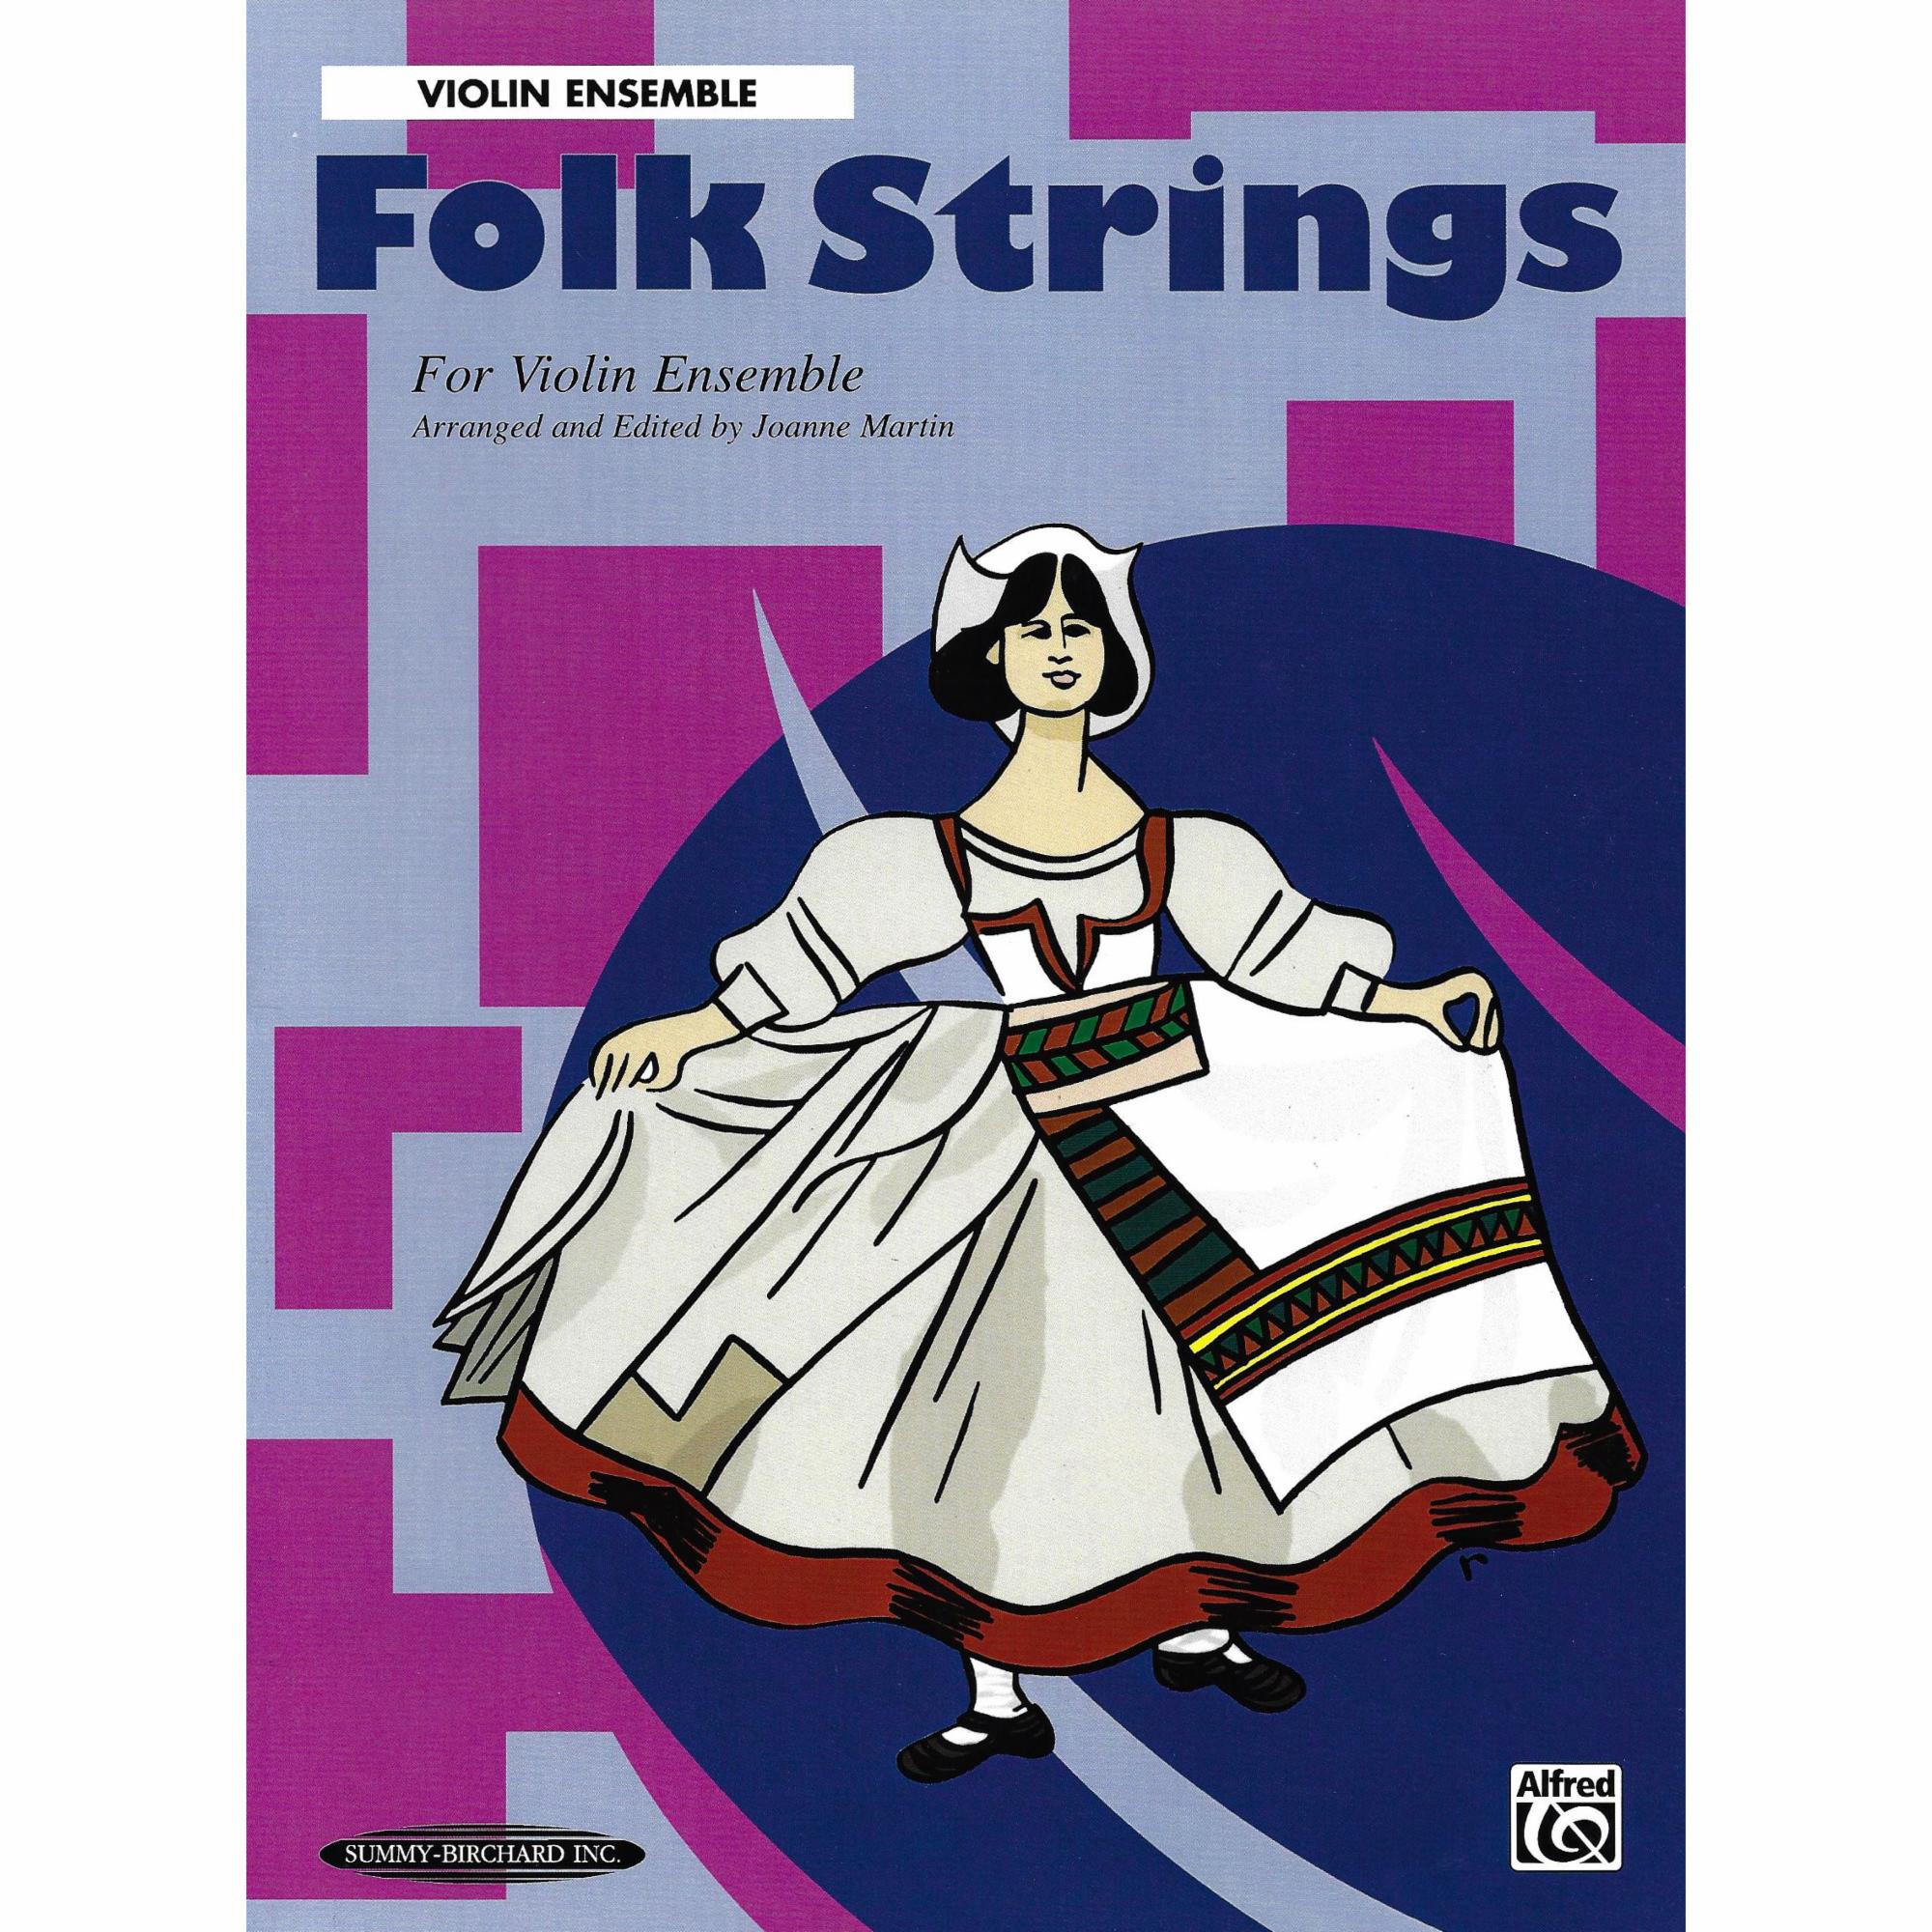 Folk Strings for Violin, Viola, or Cello Ensemble